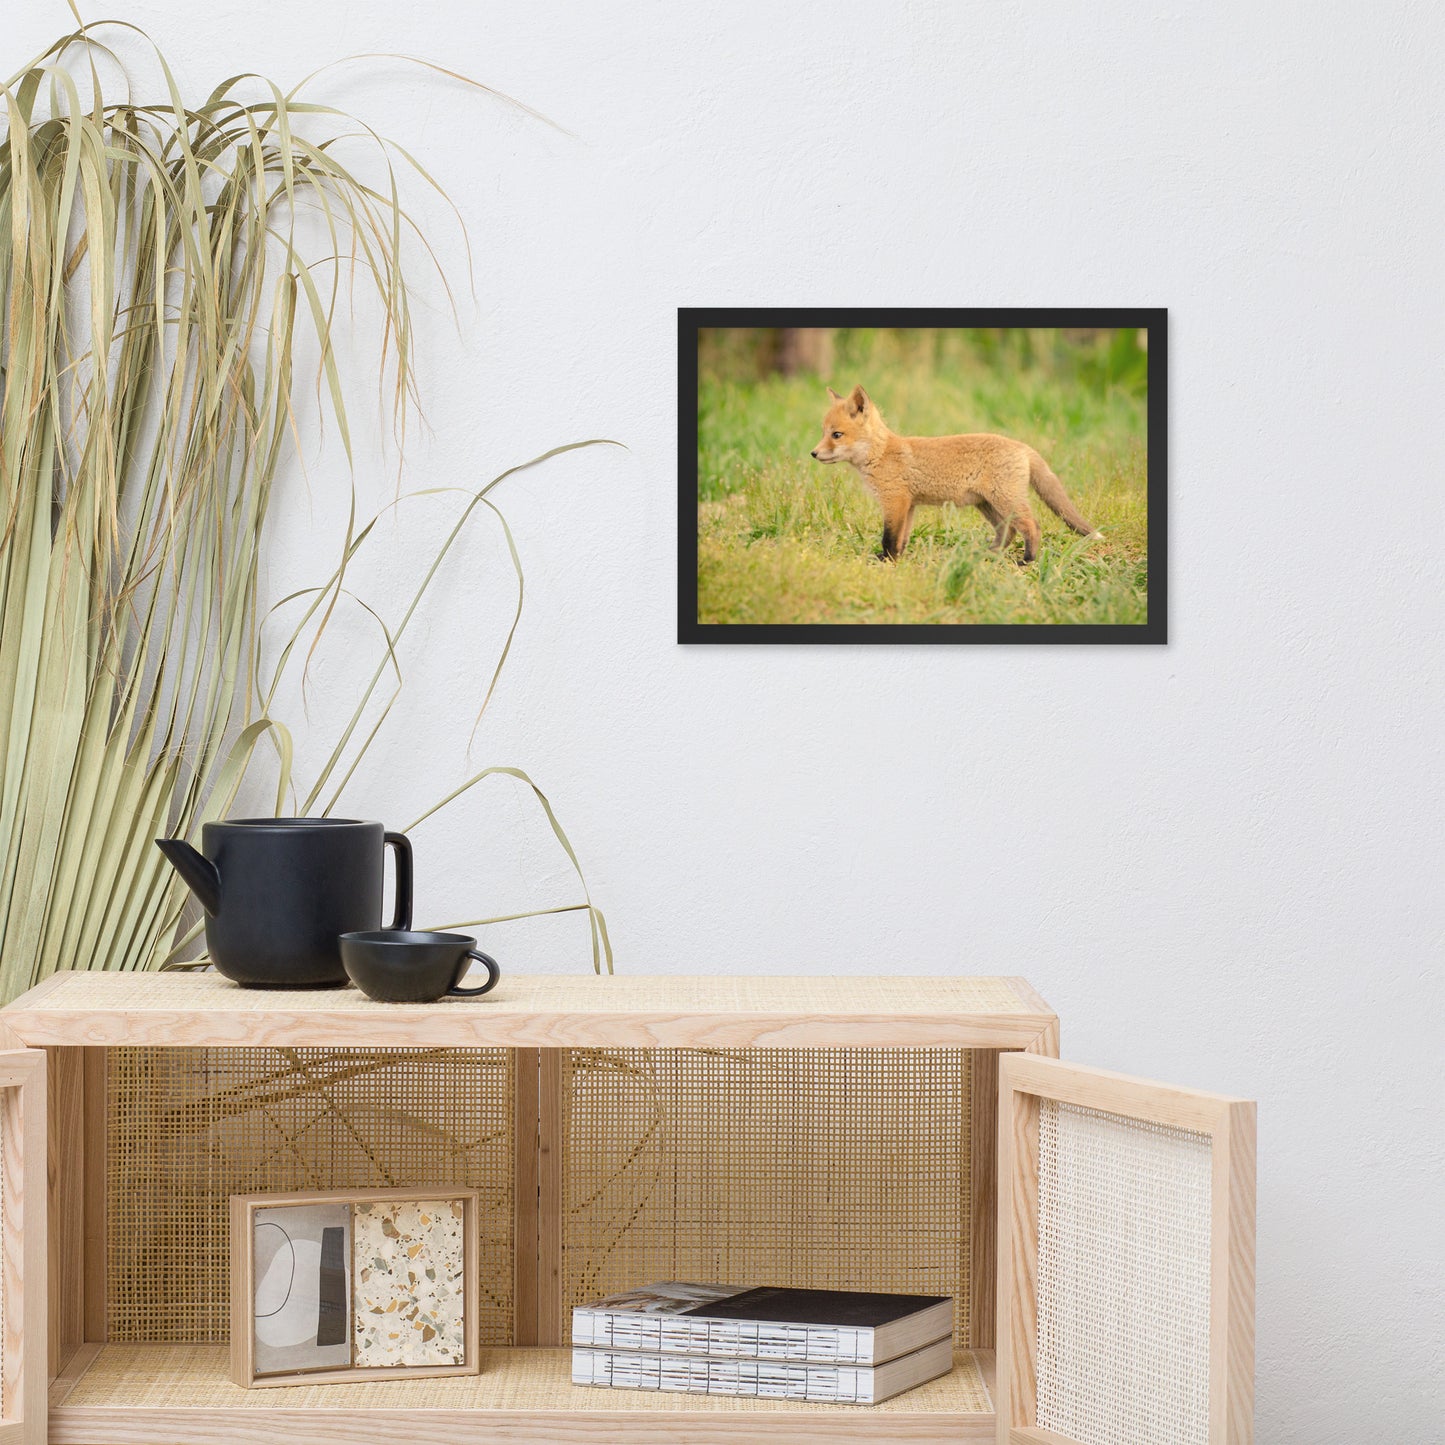 Nursery Art Decor: Baby Fox Pup In Meadow/ Animal / Wildlife / Nature Photographic Artwork - Framed Artwork - Wall Decor